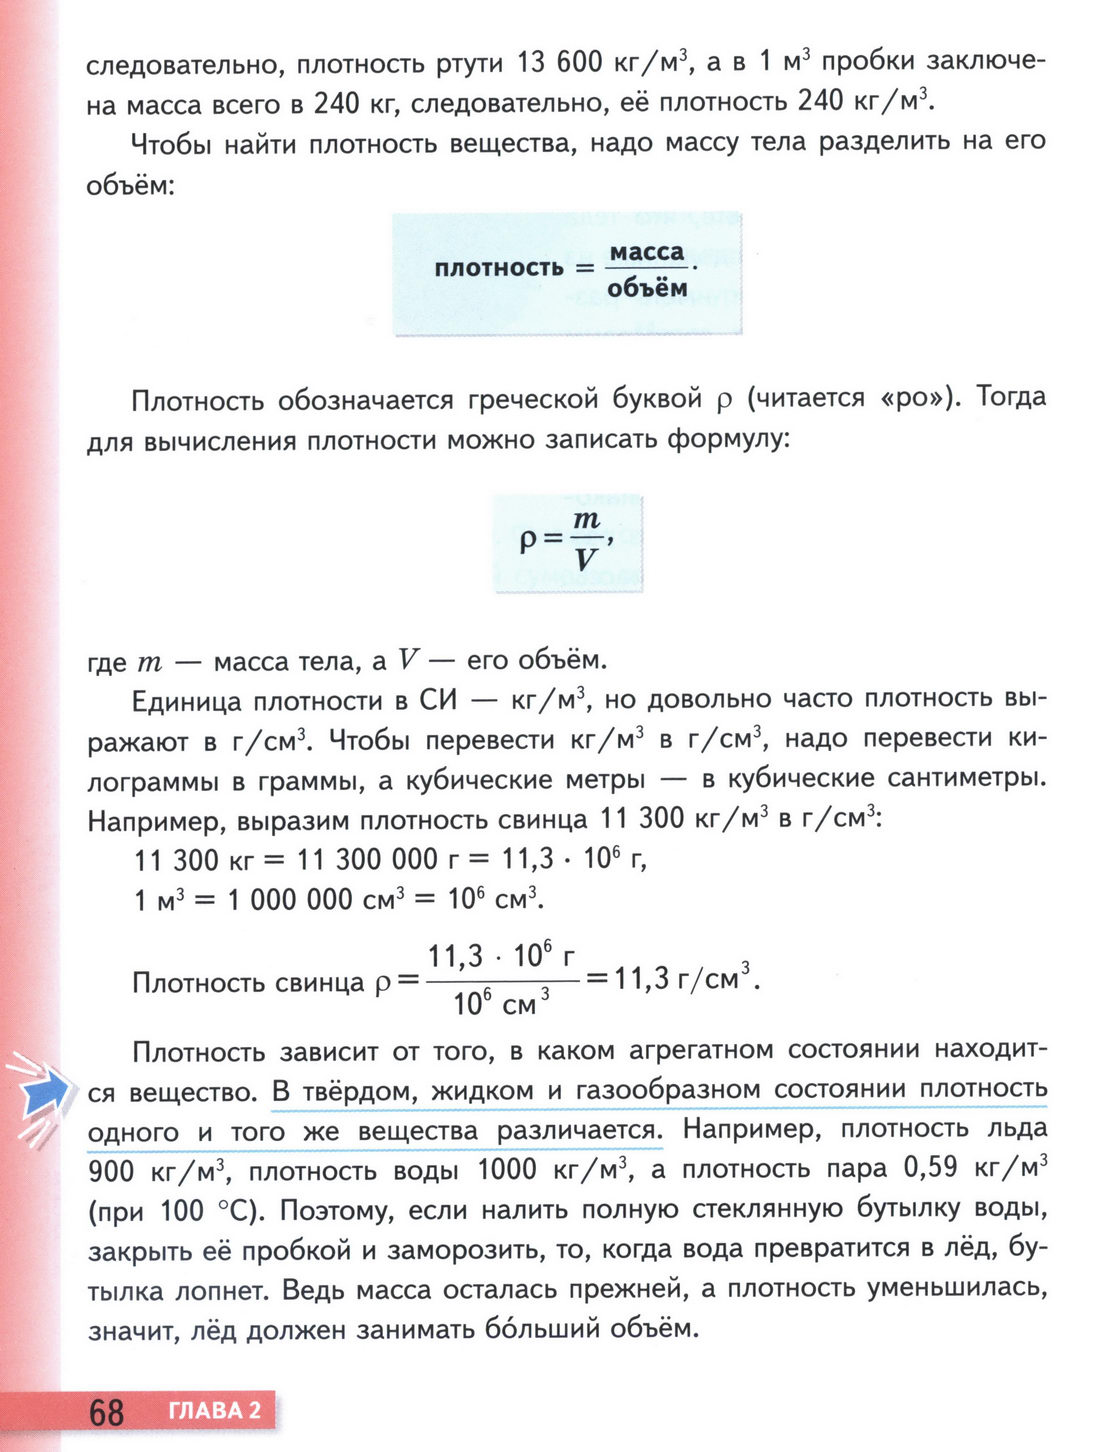 стр 68 учебника физики 7 класс 23 параграф